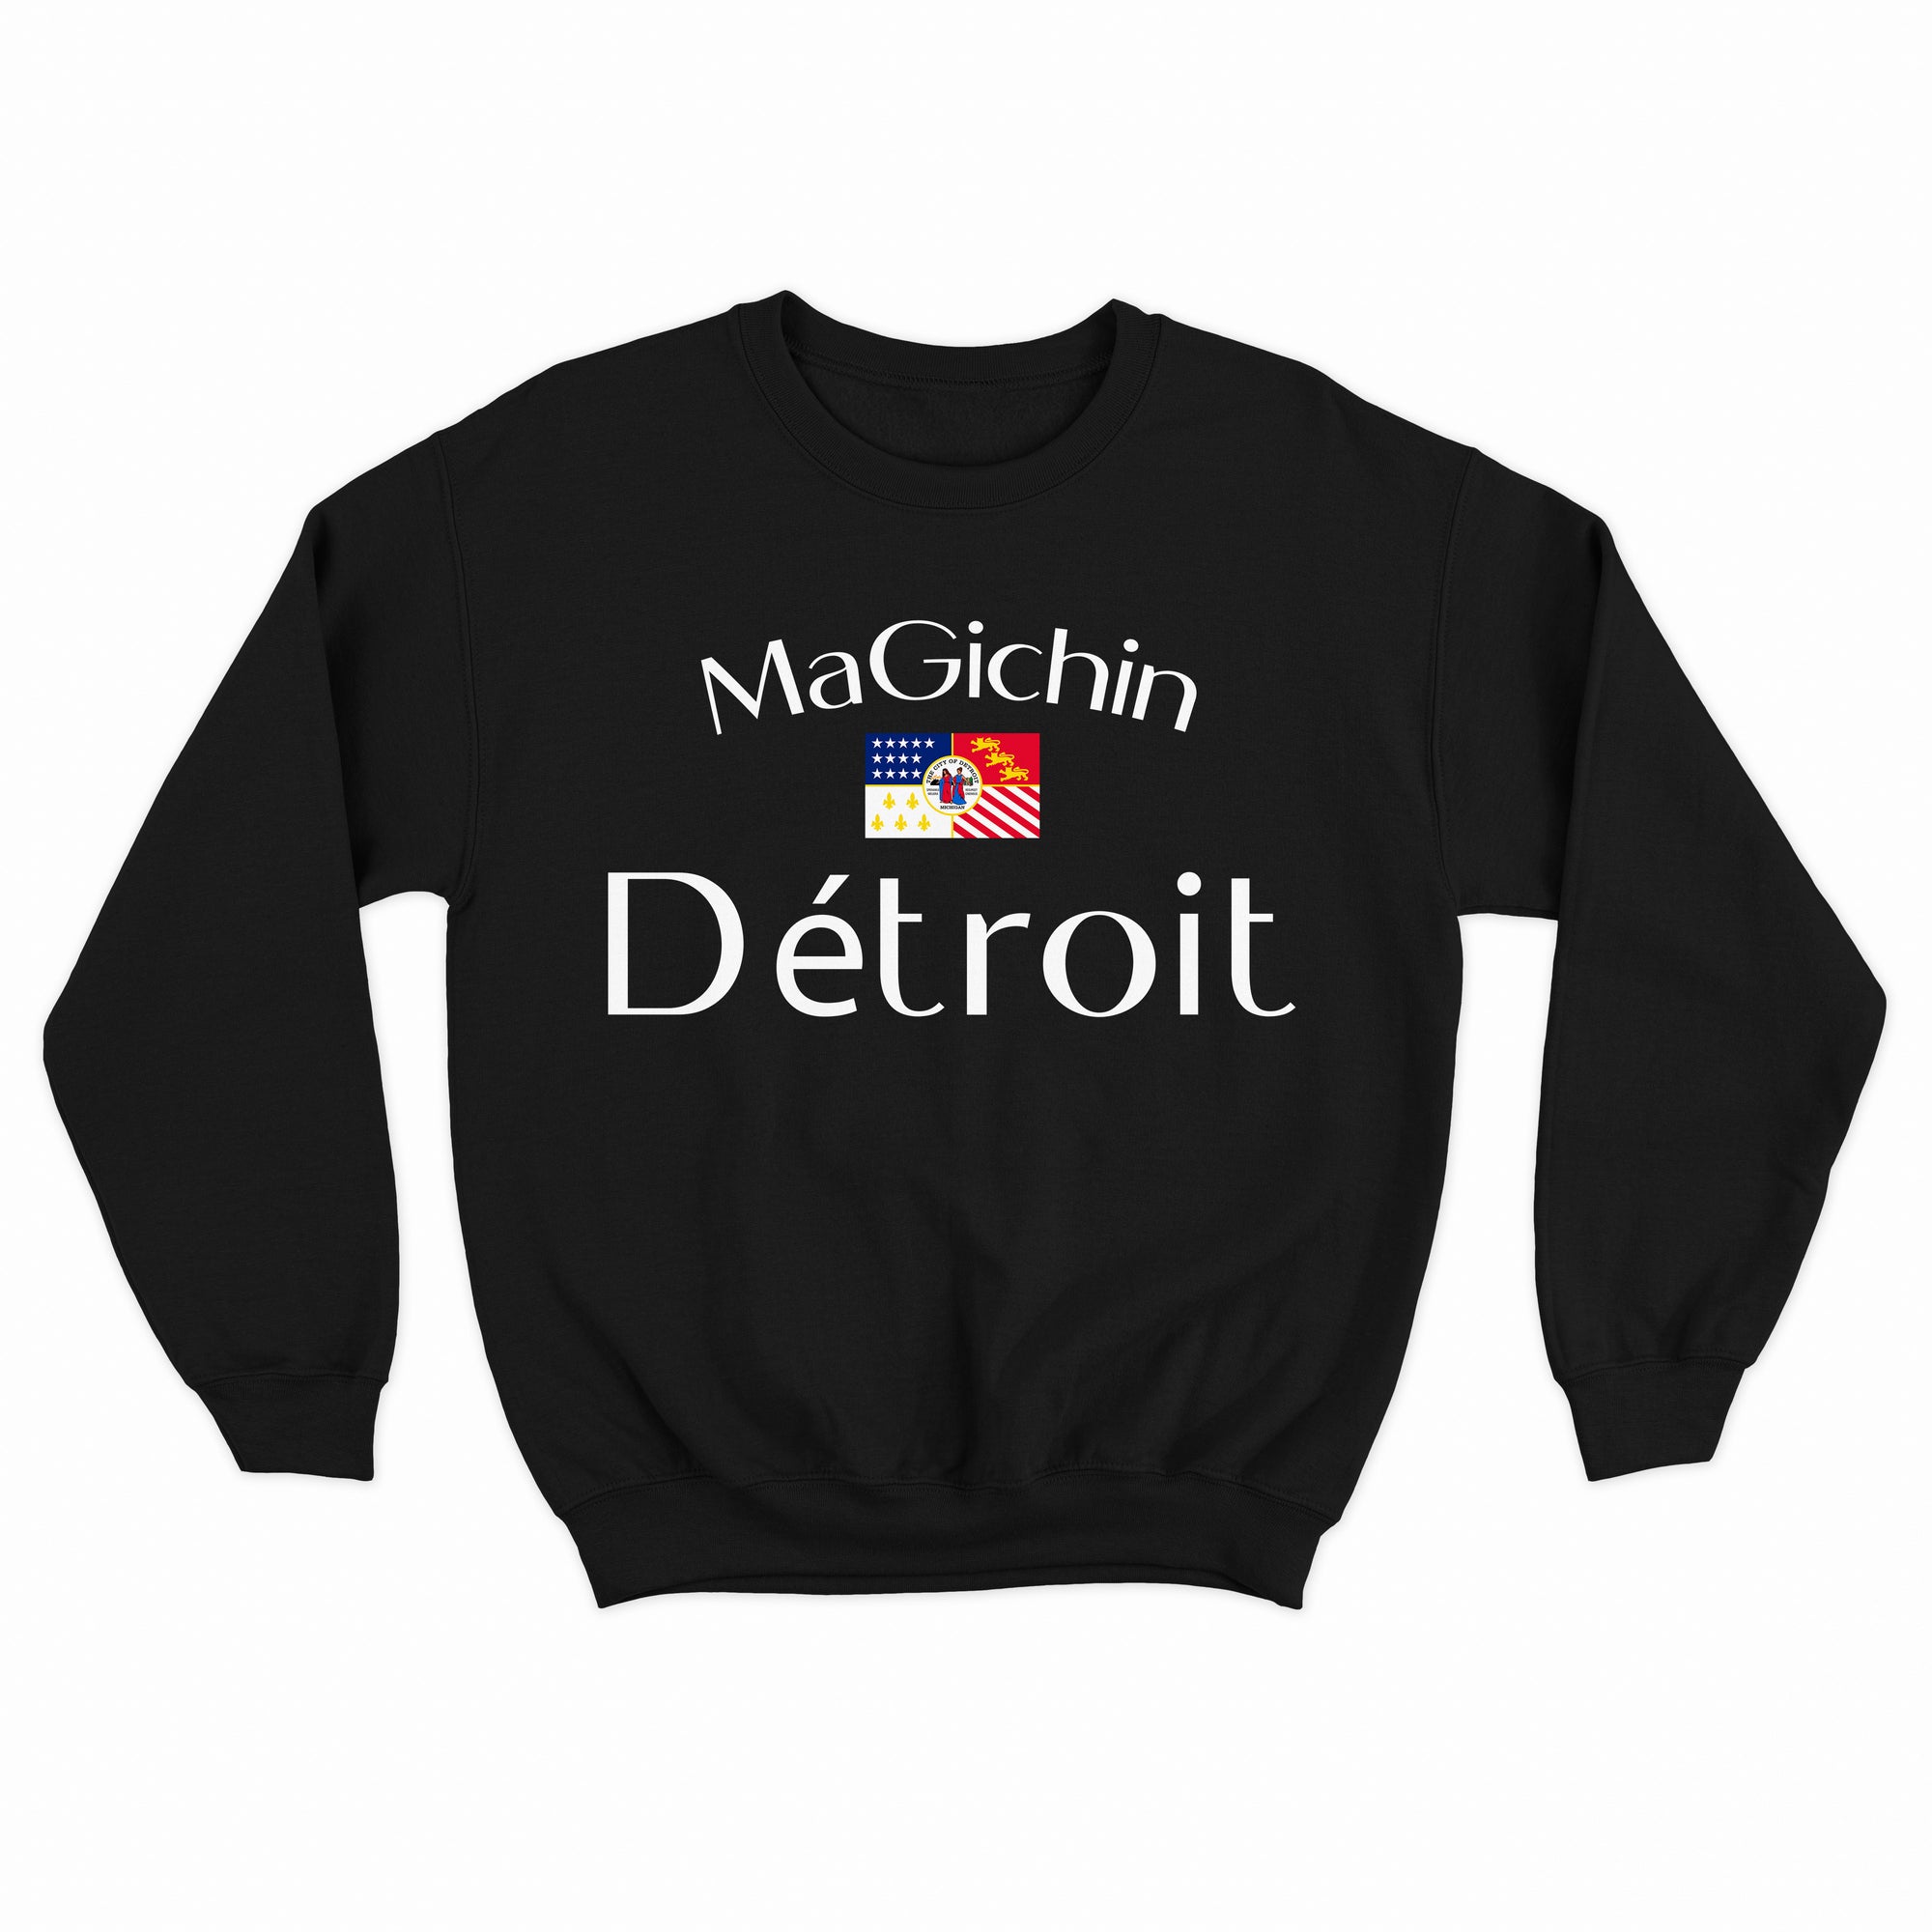 Magichinwear [DETROIT MOTTO] Sweater - magichinwear